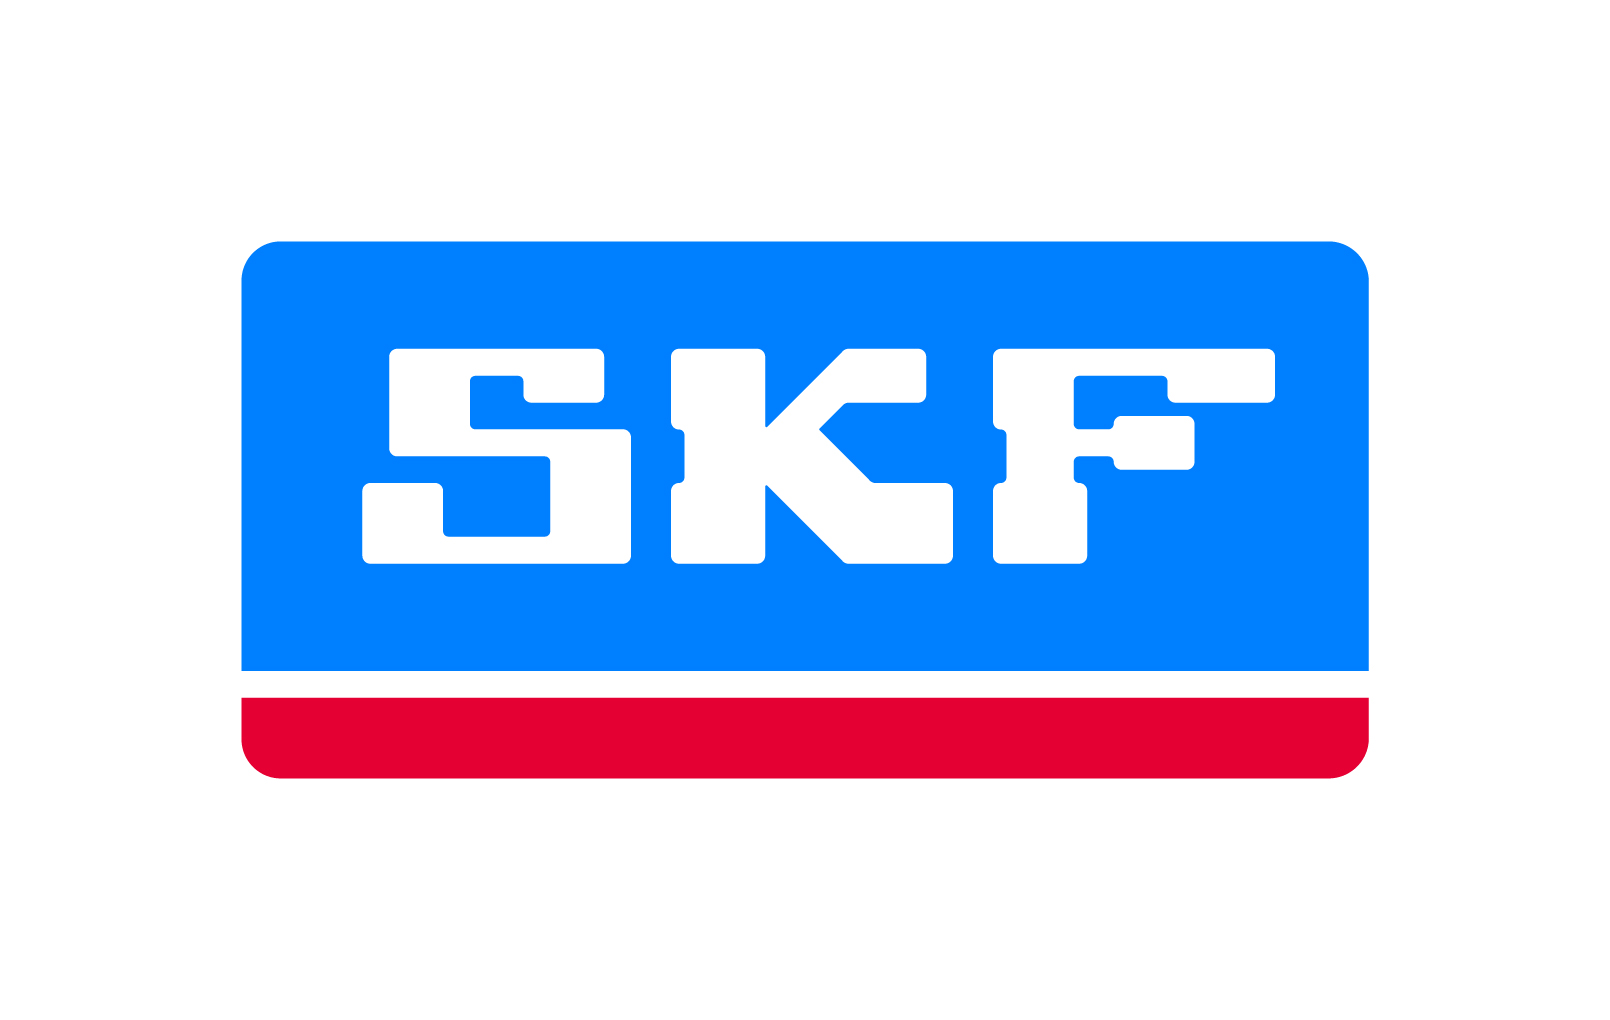 TRUCK MULTISERVICES - logo SKF